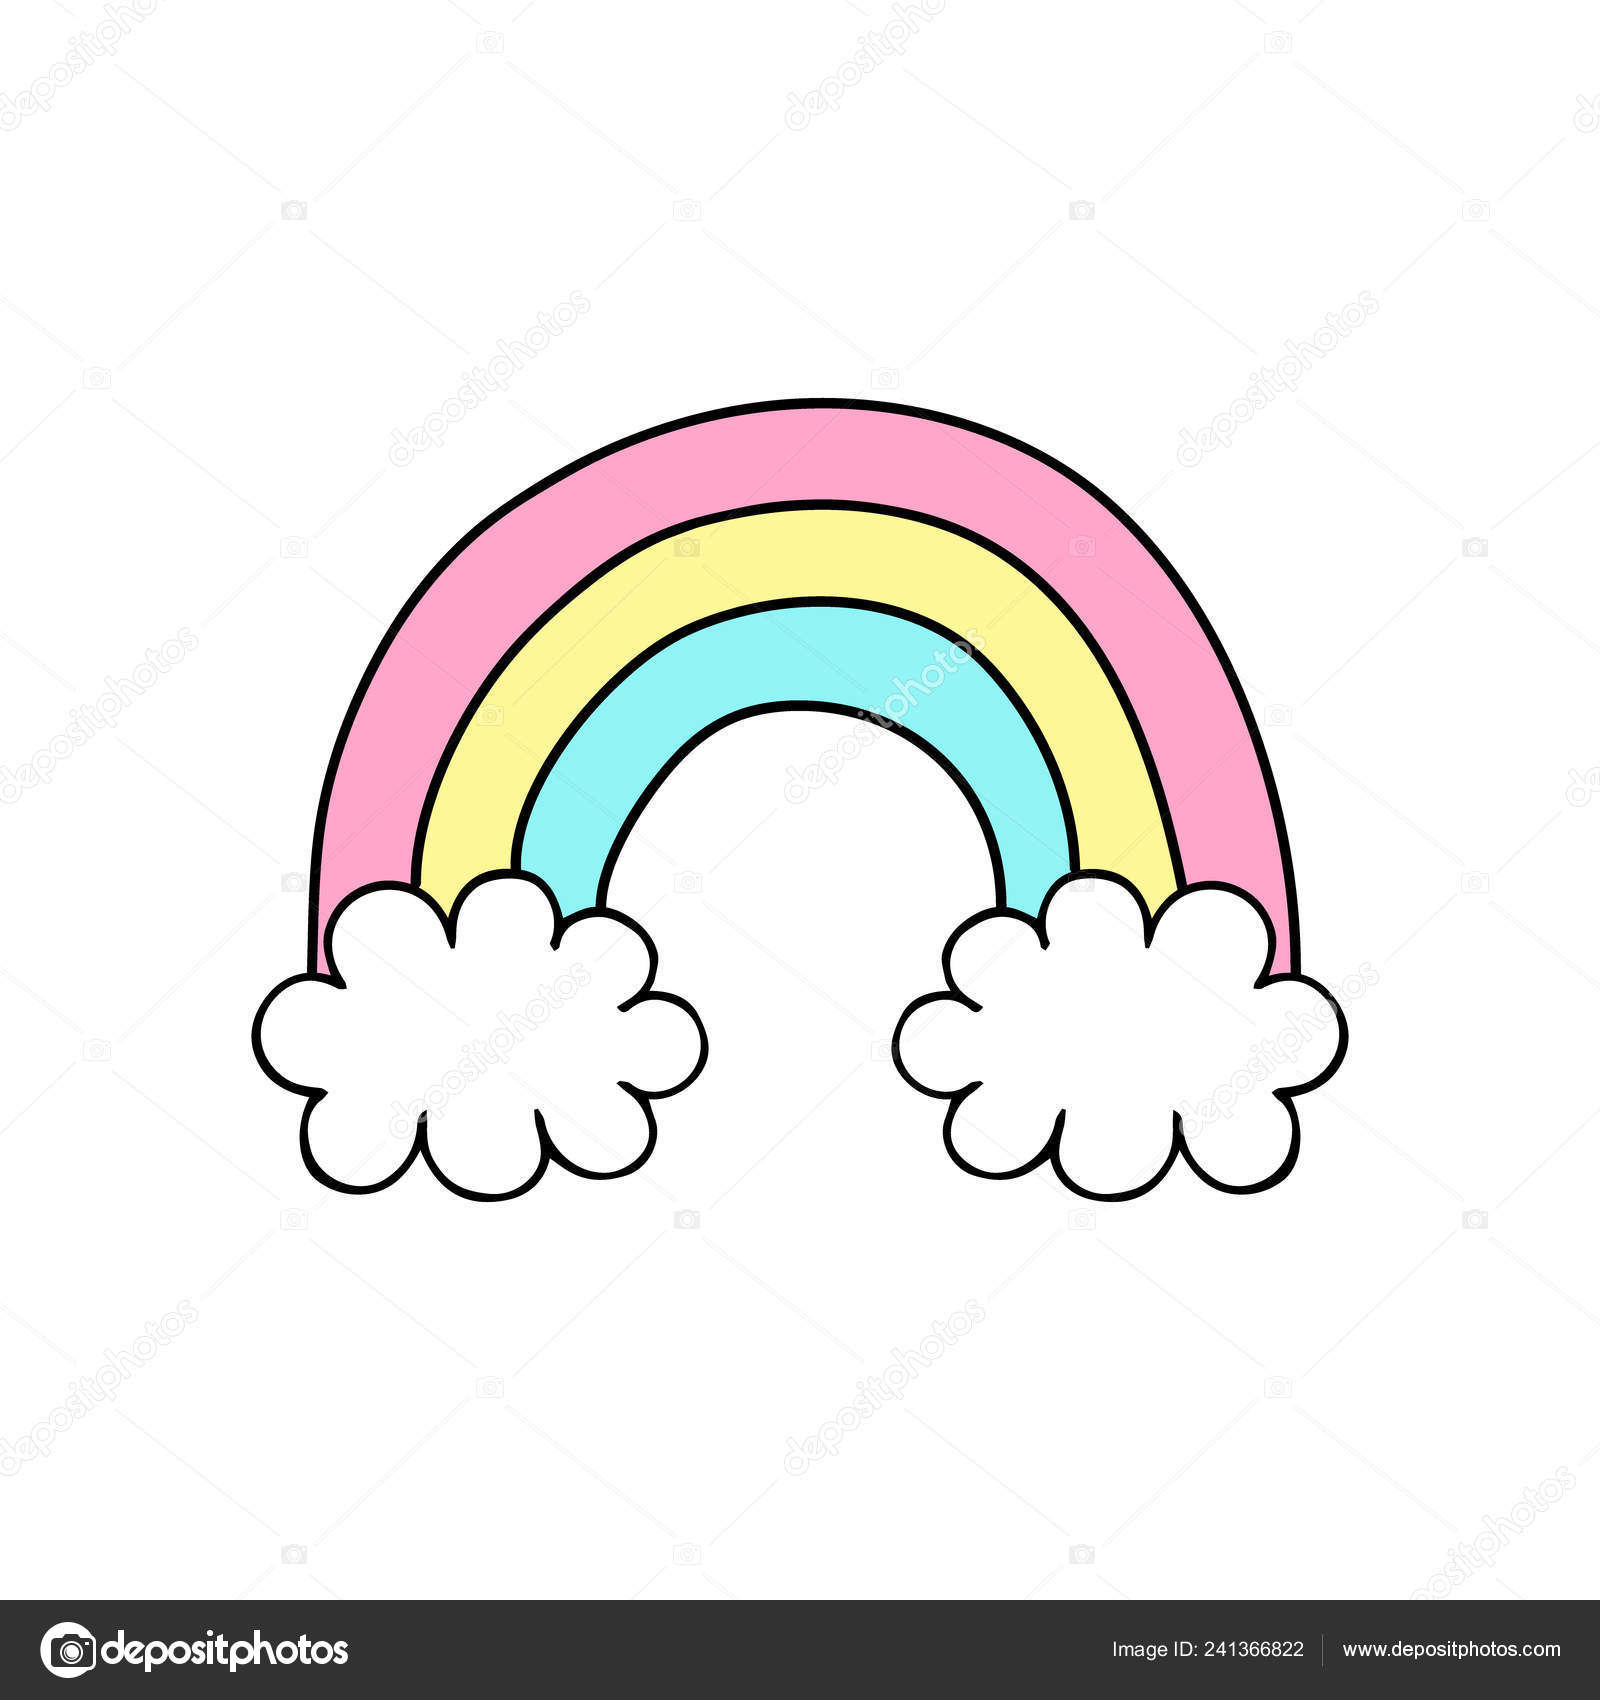 Rainbow cute drawing ideas rainbow cute drawings Easy and fun